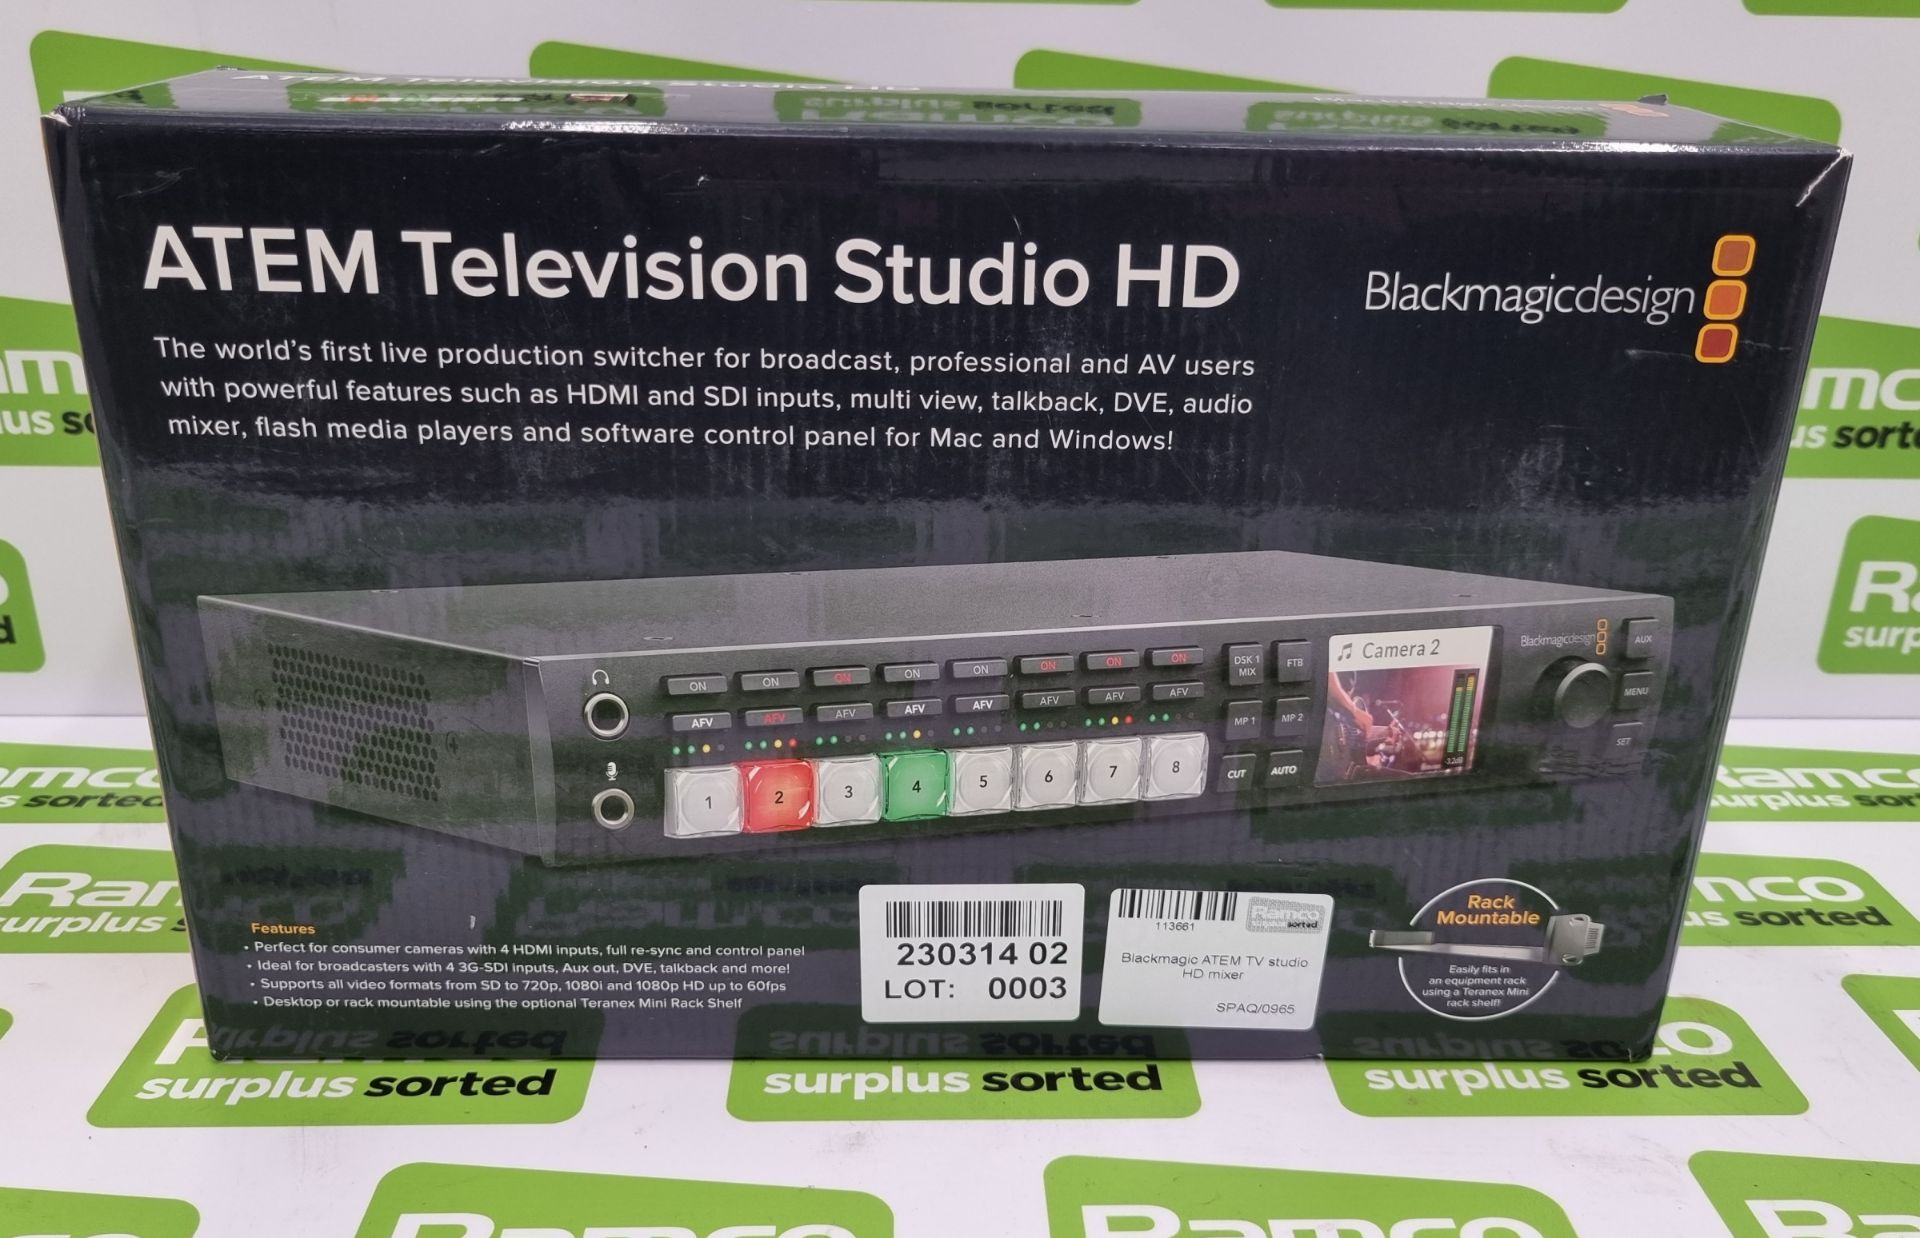 Blackmagic ATEM TV studio HD mixer